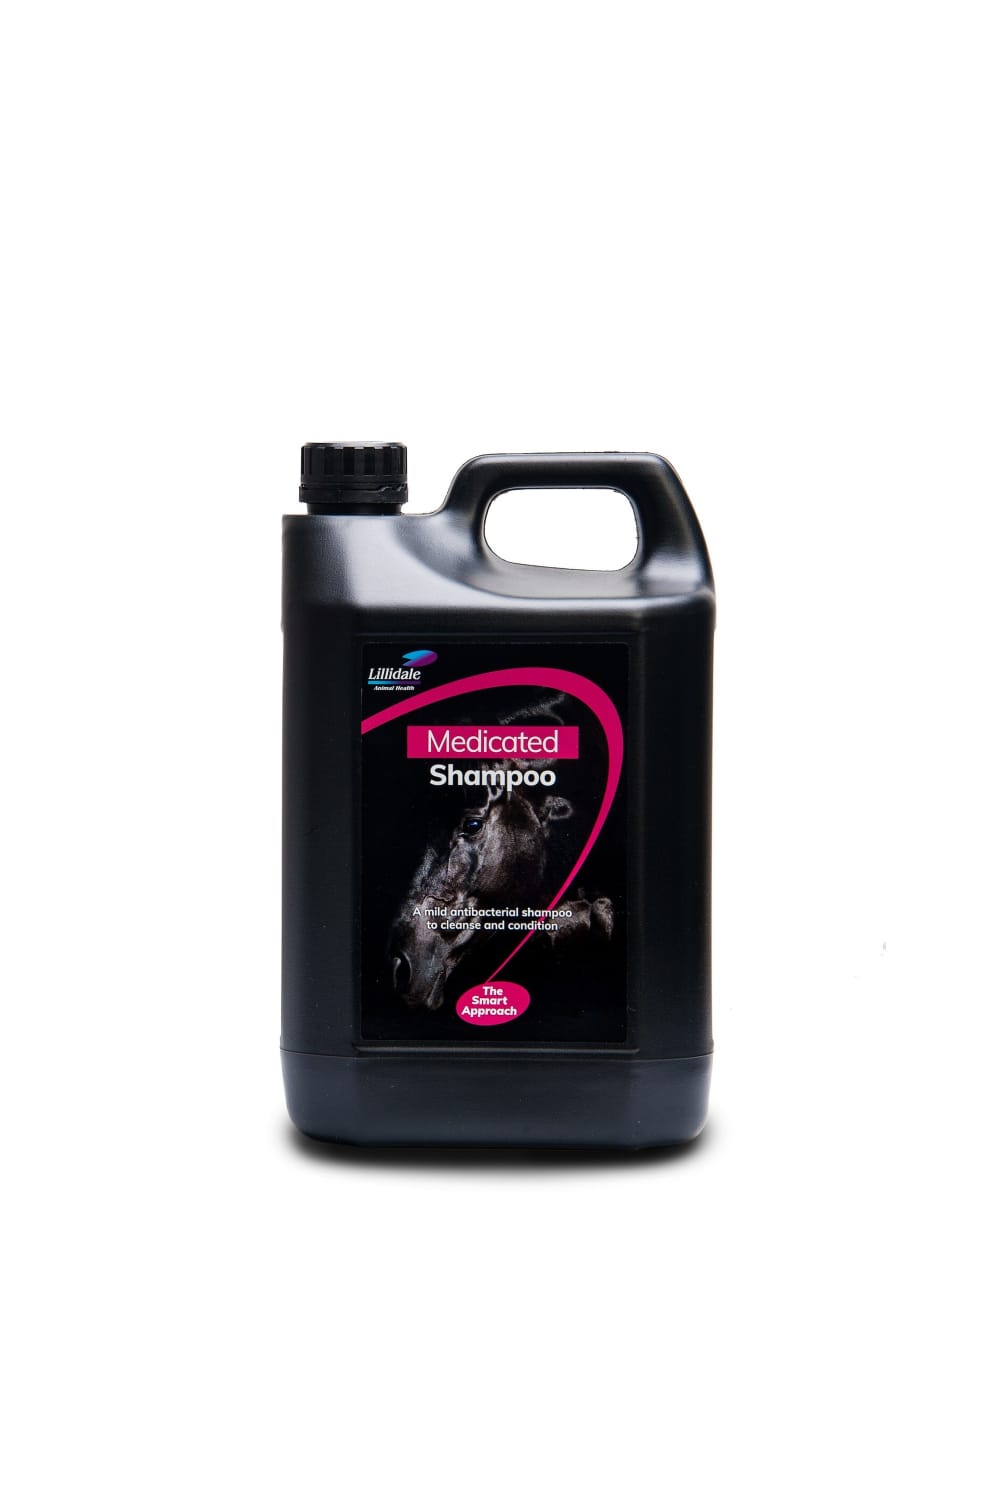 Lillidale Medicated Horse Shampoo Liquid (May Vary) (8.4 Pints)